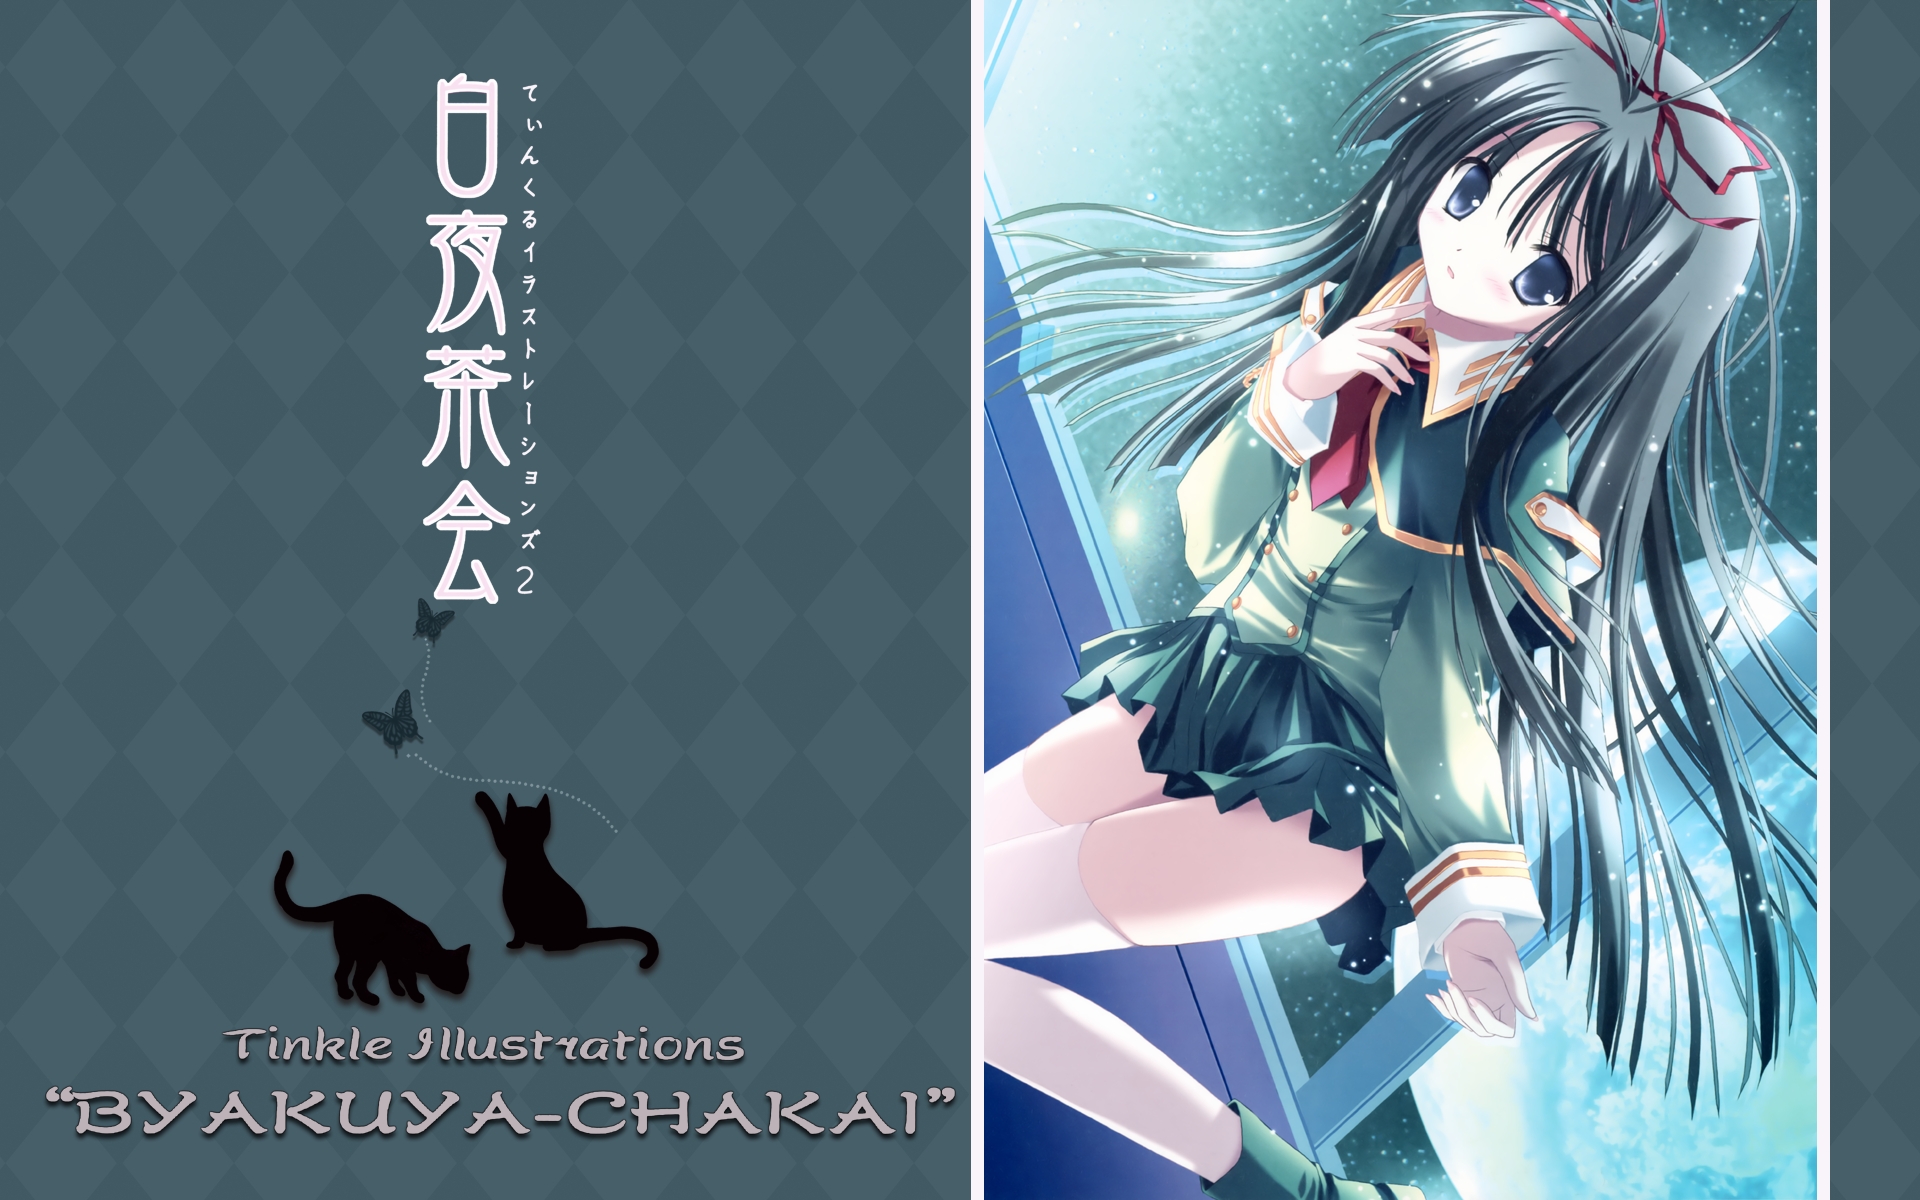 Byakuya-Chakai | page 2 of 4 - Zerochan Anime Image Board